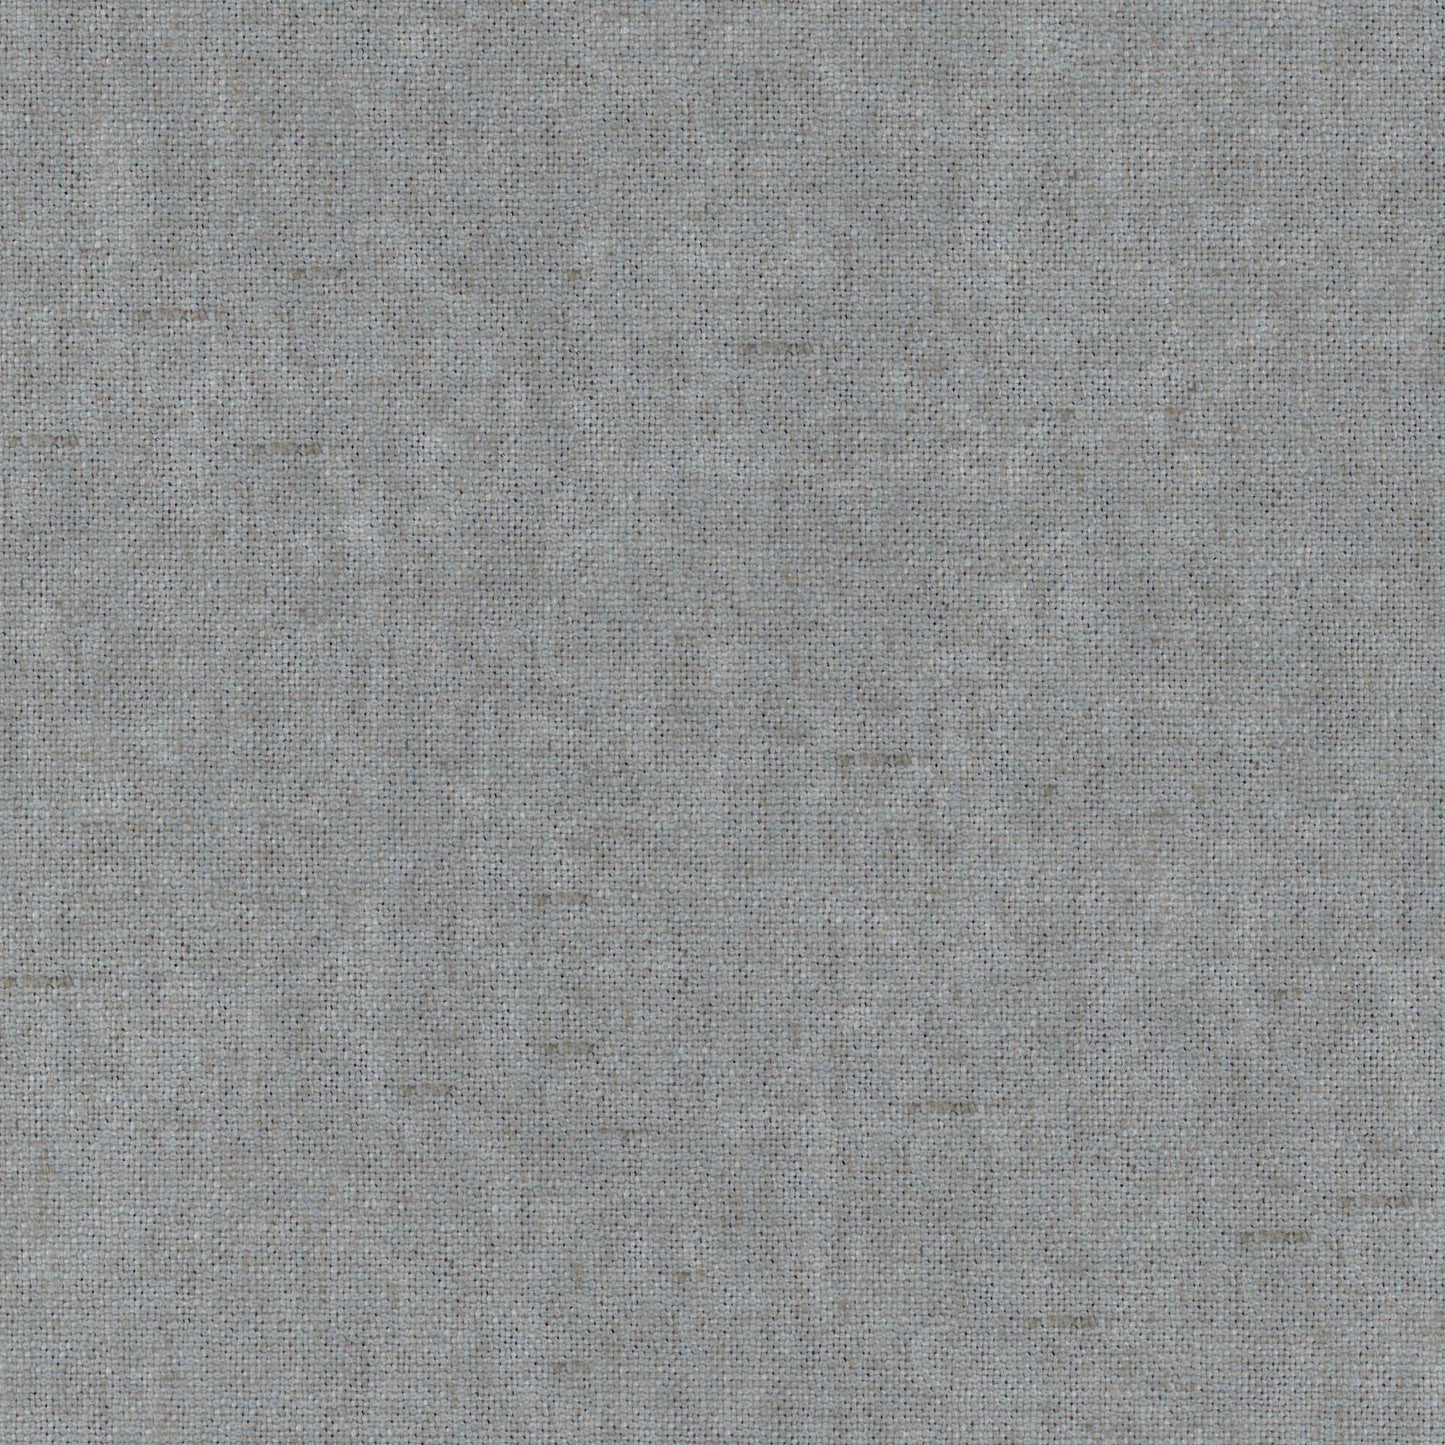 Home Fabrics - FibreGuard - Monterey - 05-Drizzle - Fabric per Meter